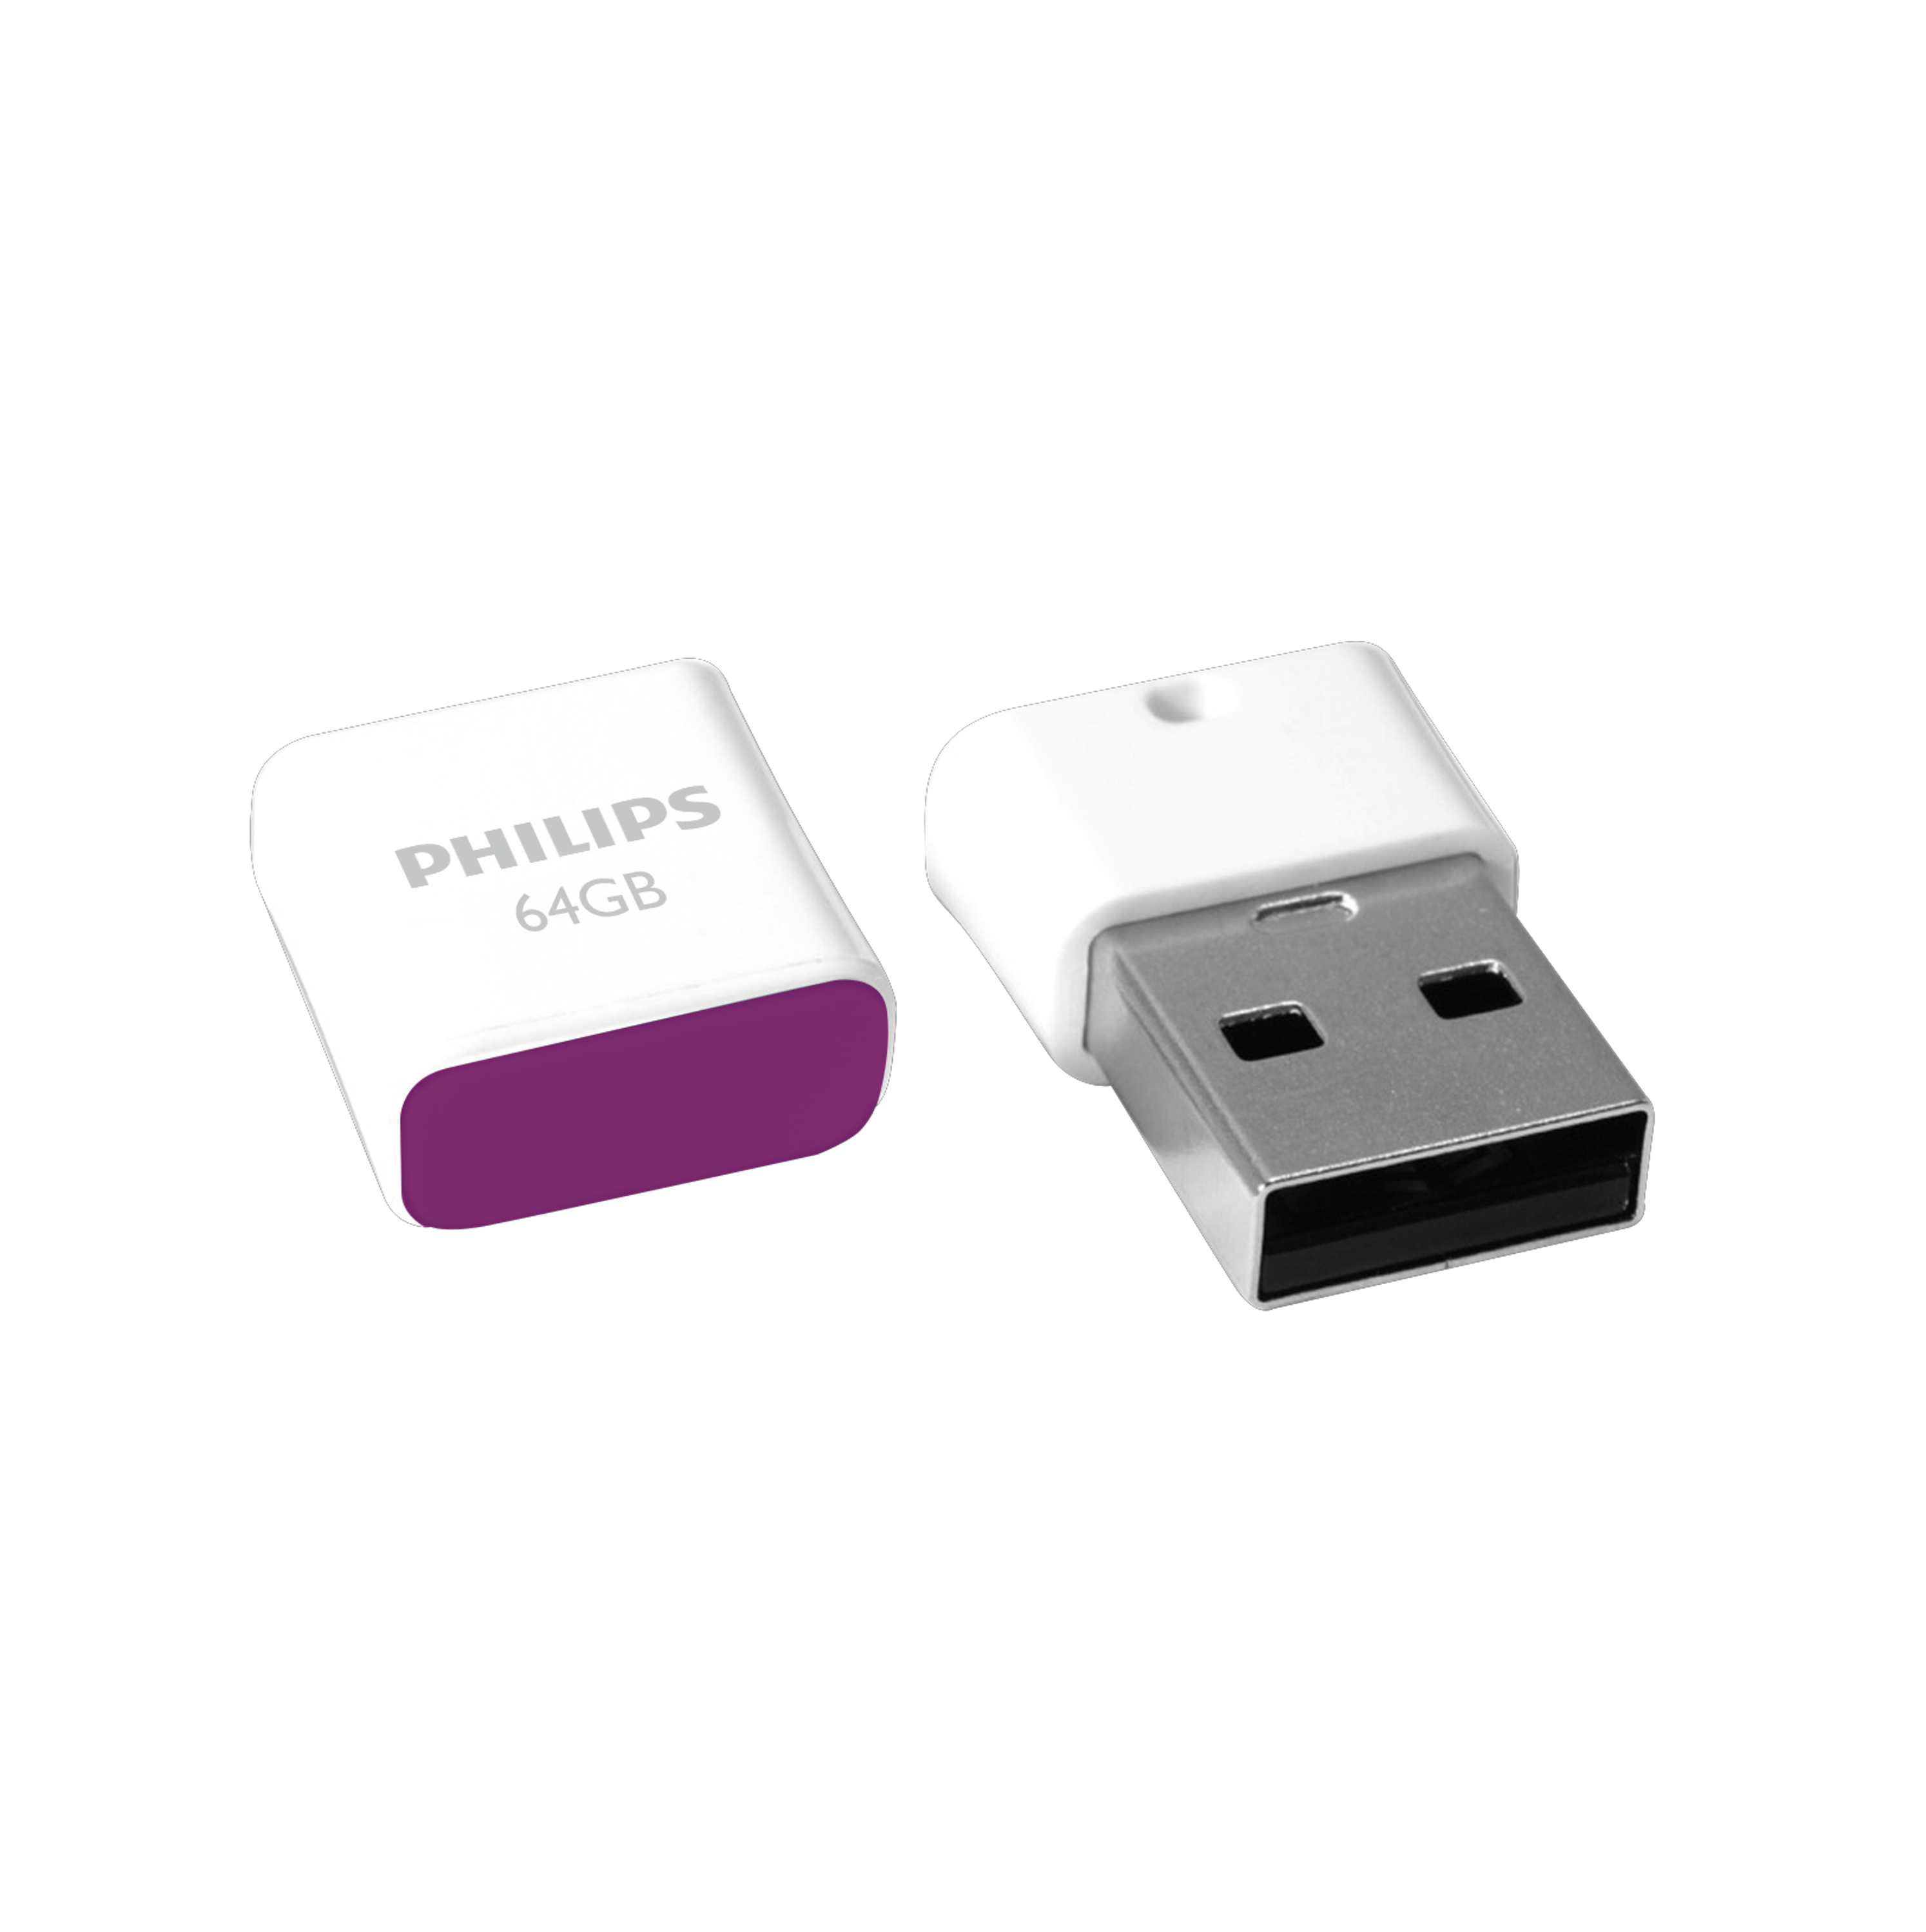 PHILIPS USB Stick Pico Edition, GB) (Weiß, 64 weiss, 64GB USB-Stick